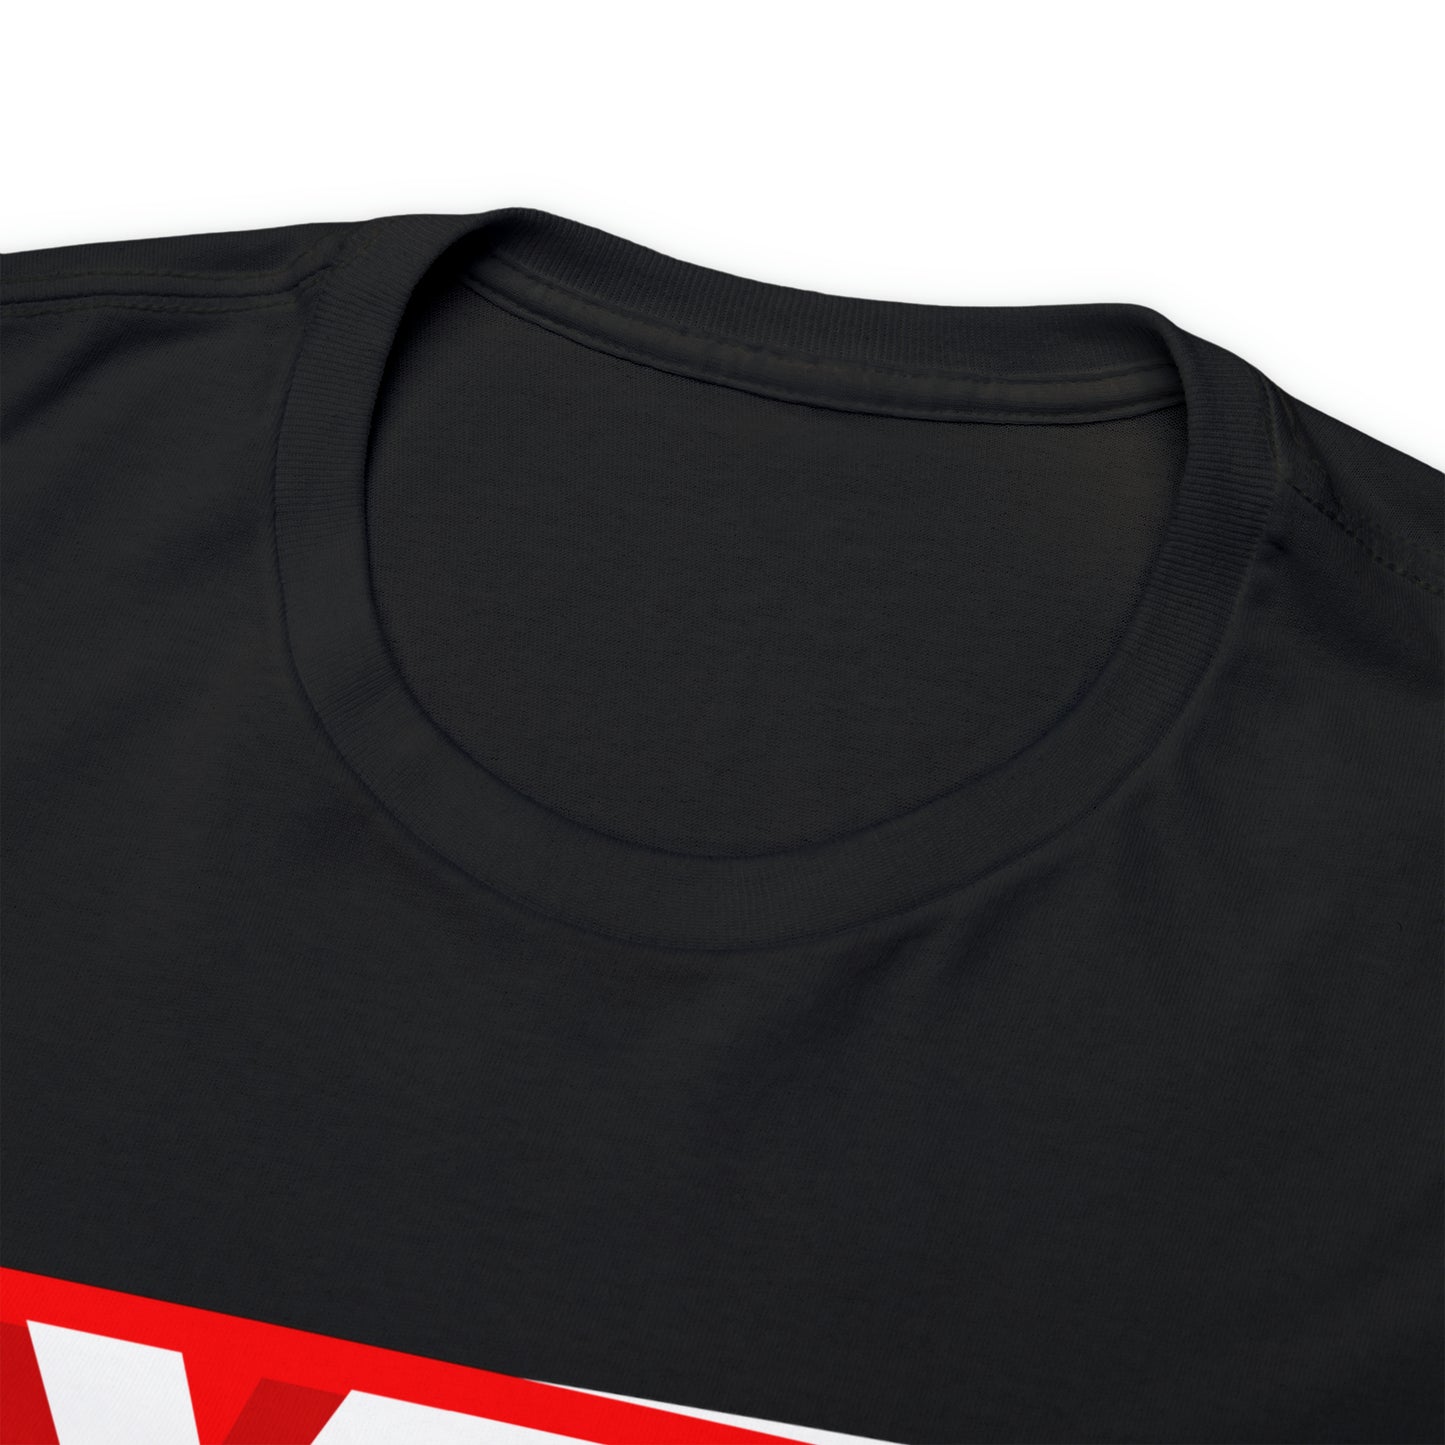 Lyte "Boxed" T-Shirt